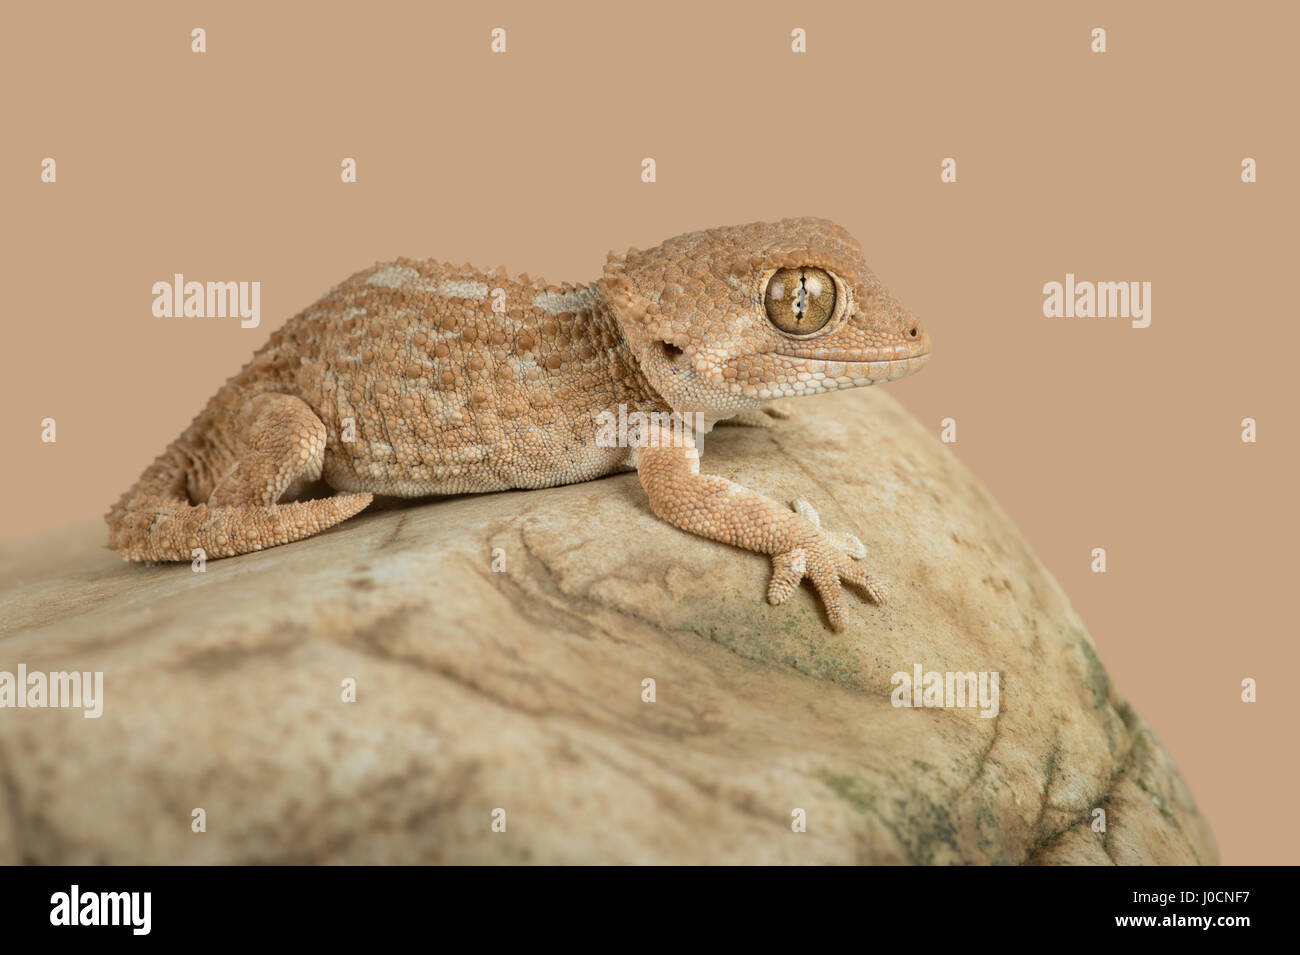 Gecko casqué (Tarentola chazaliae) Banque D'Images